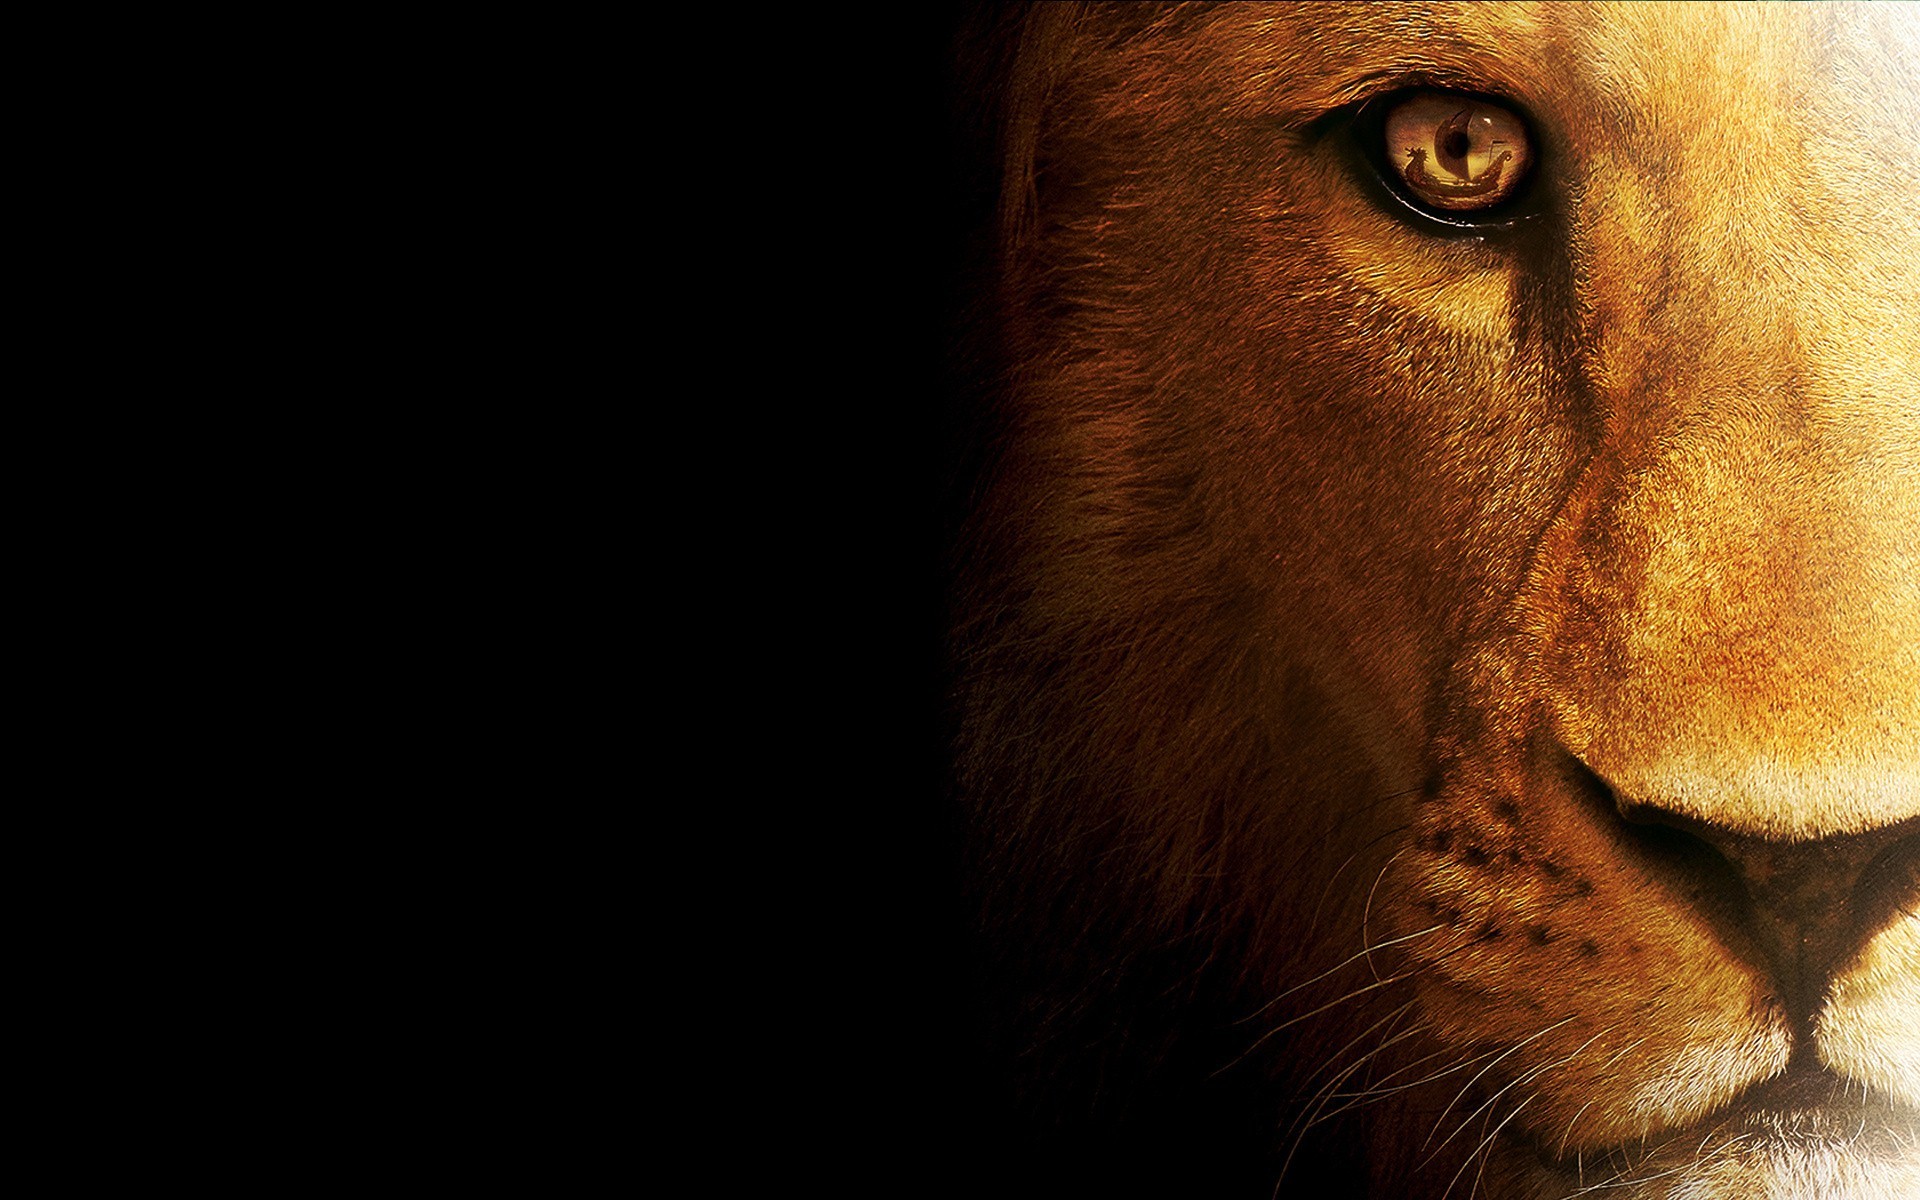 lion desktop wallpaper